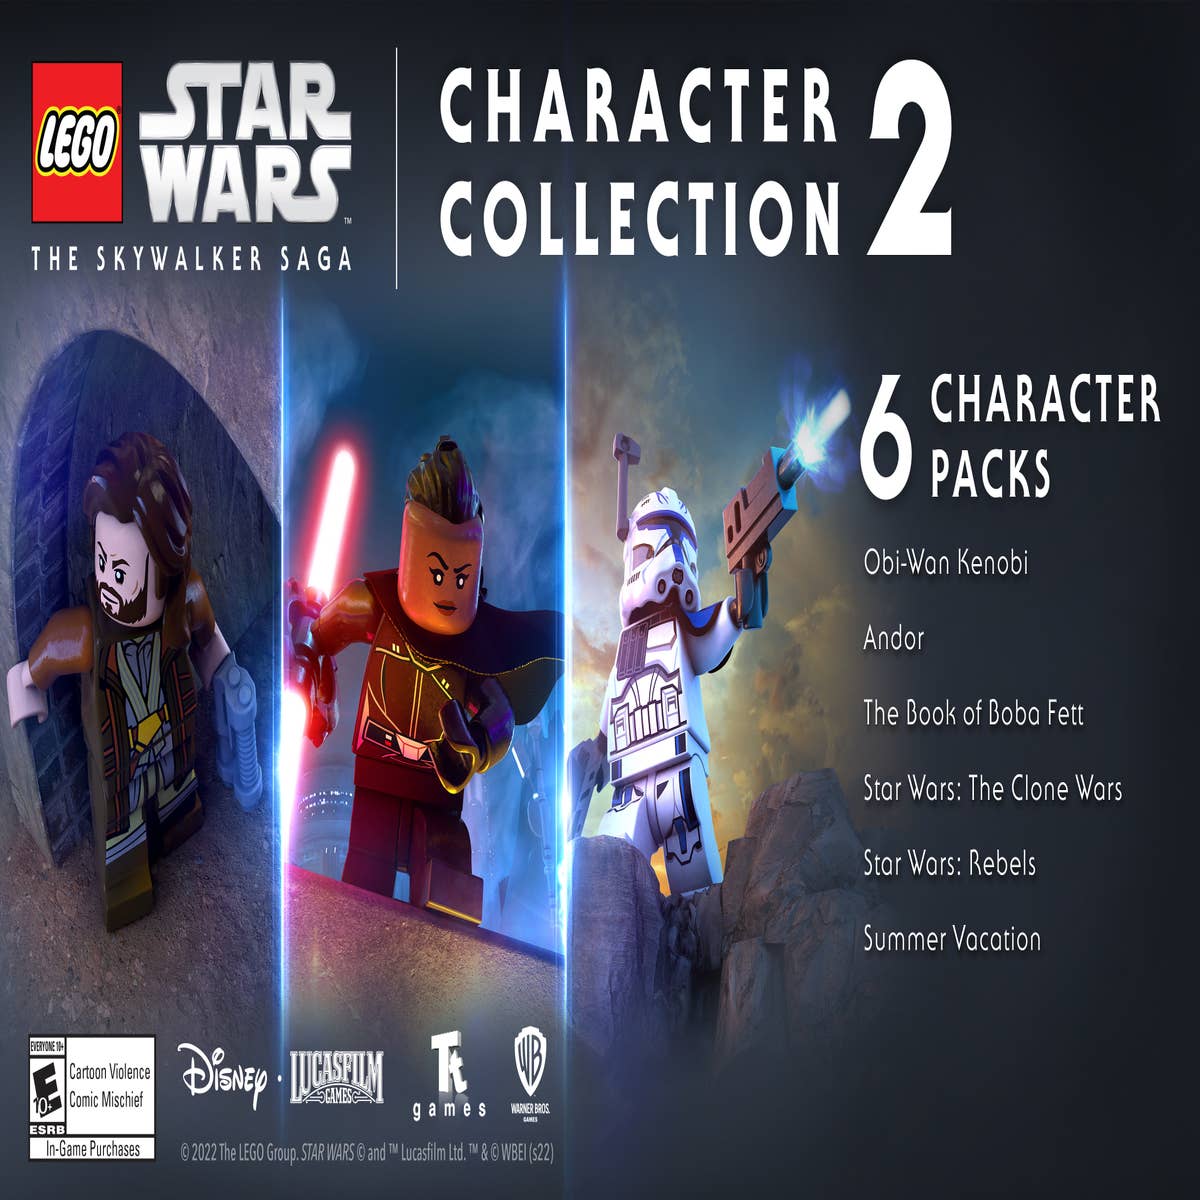 Jogo Lego Star Wars: A Saga Skywalker Deluxe, PS5 - WB GAMES